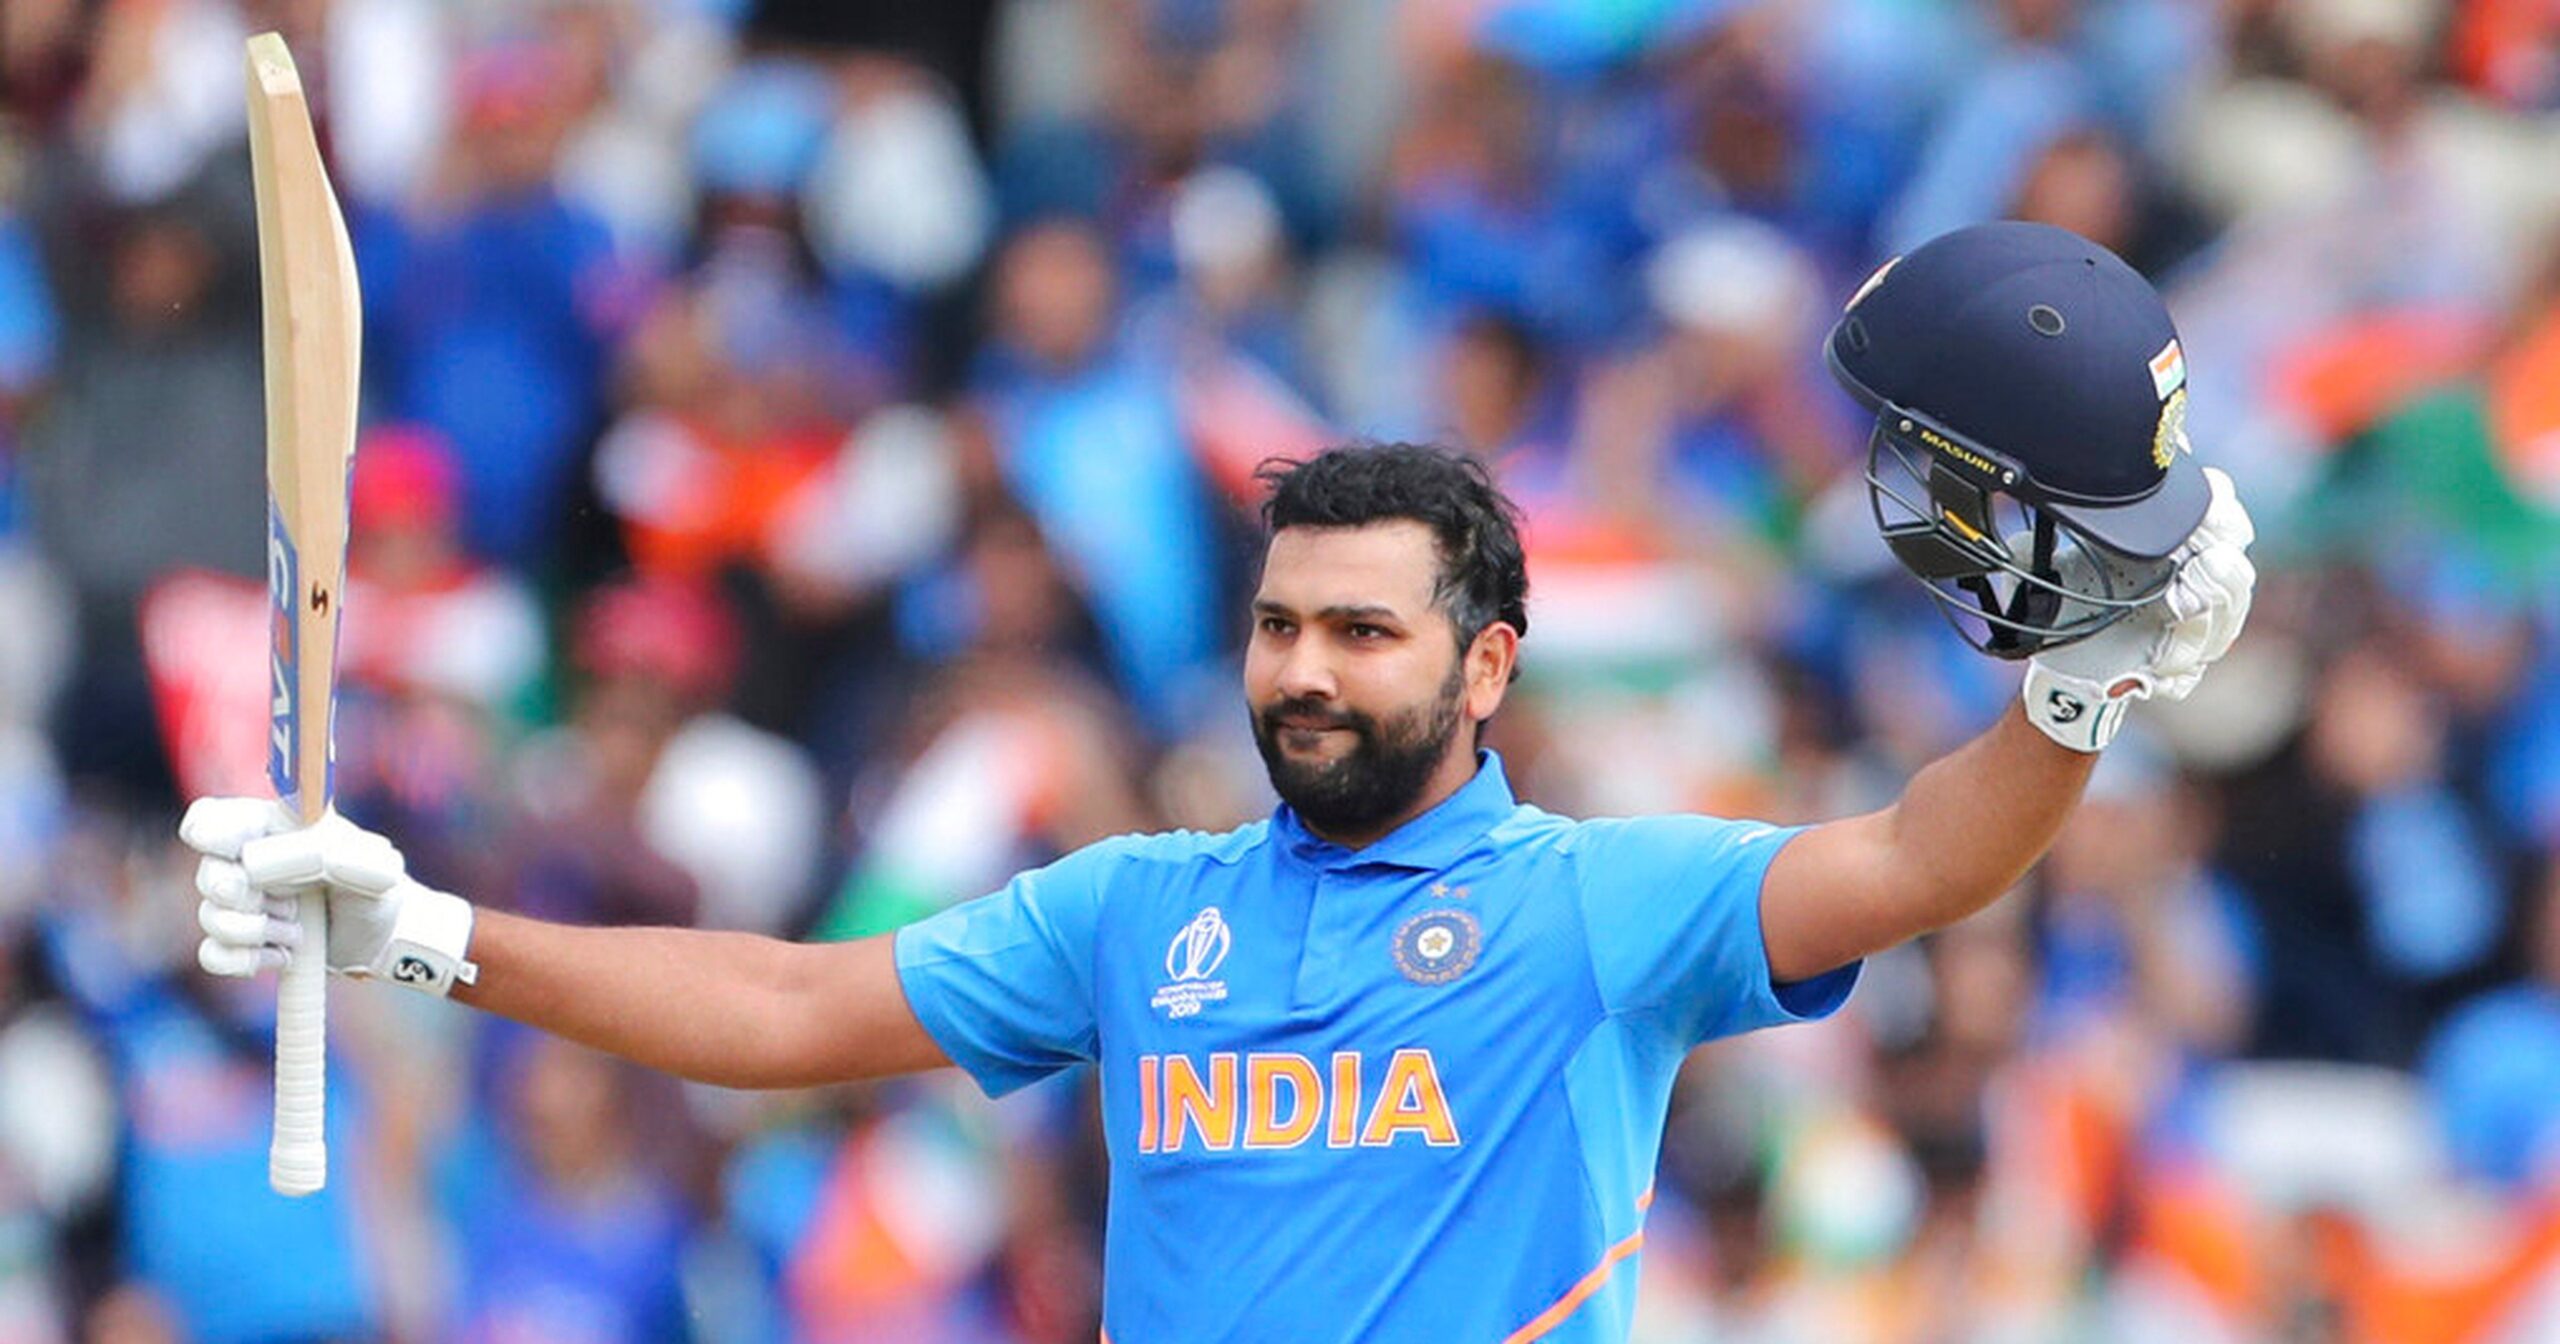 Rohit Sharma's aggressive batting set the tone for India's innings